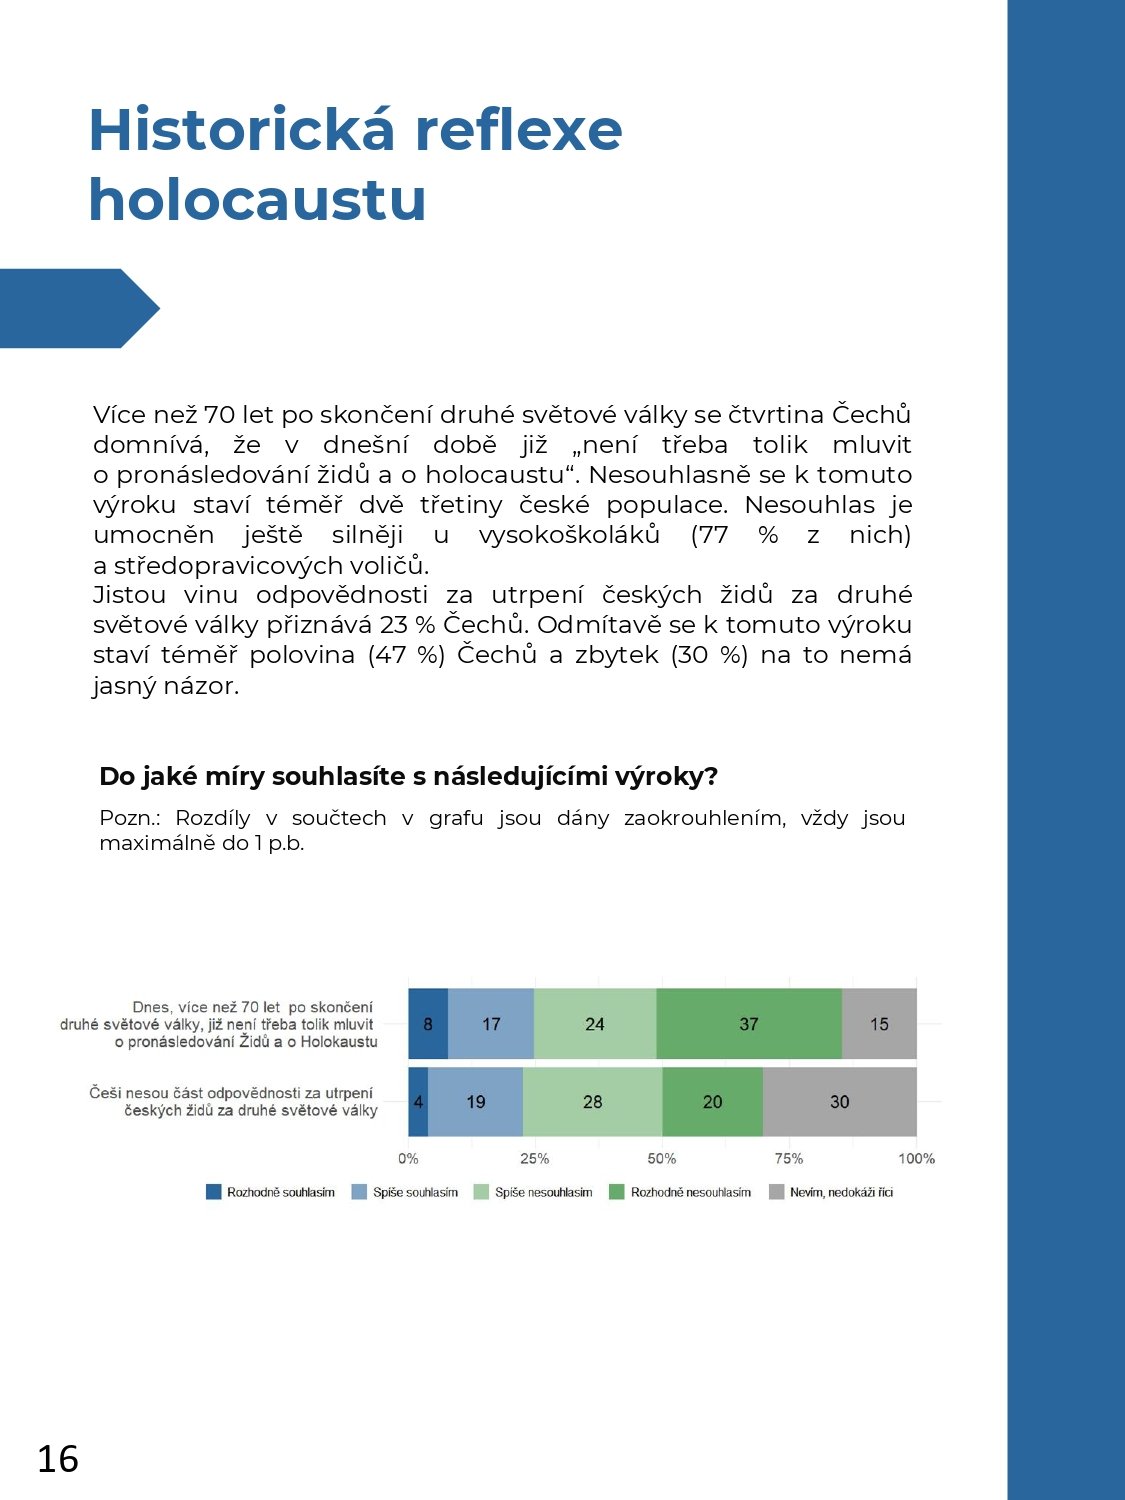 HCIS_PRCP_Public attitudes towards Israel_REPORT_CZ_Finální (2)_pages-to-jpg-0016.jpg